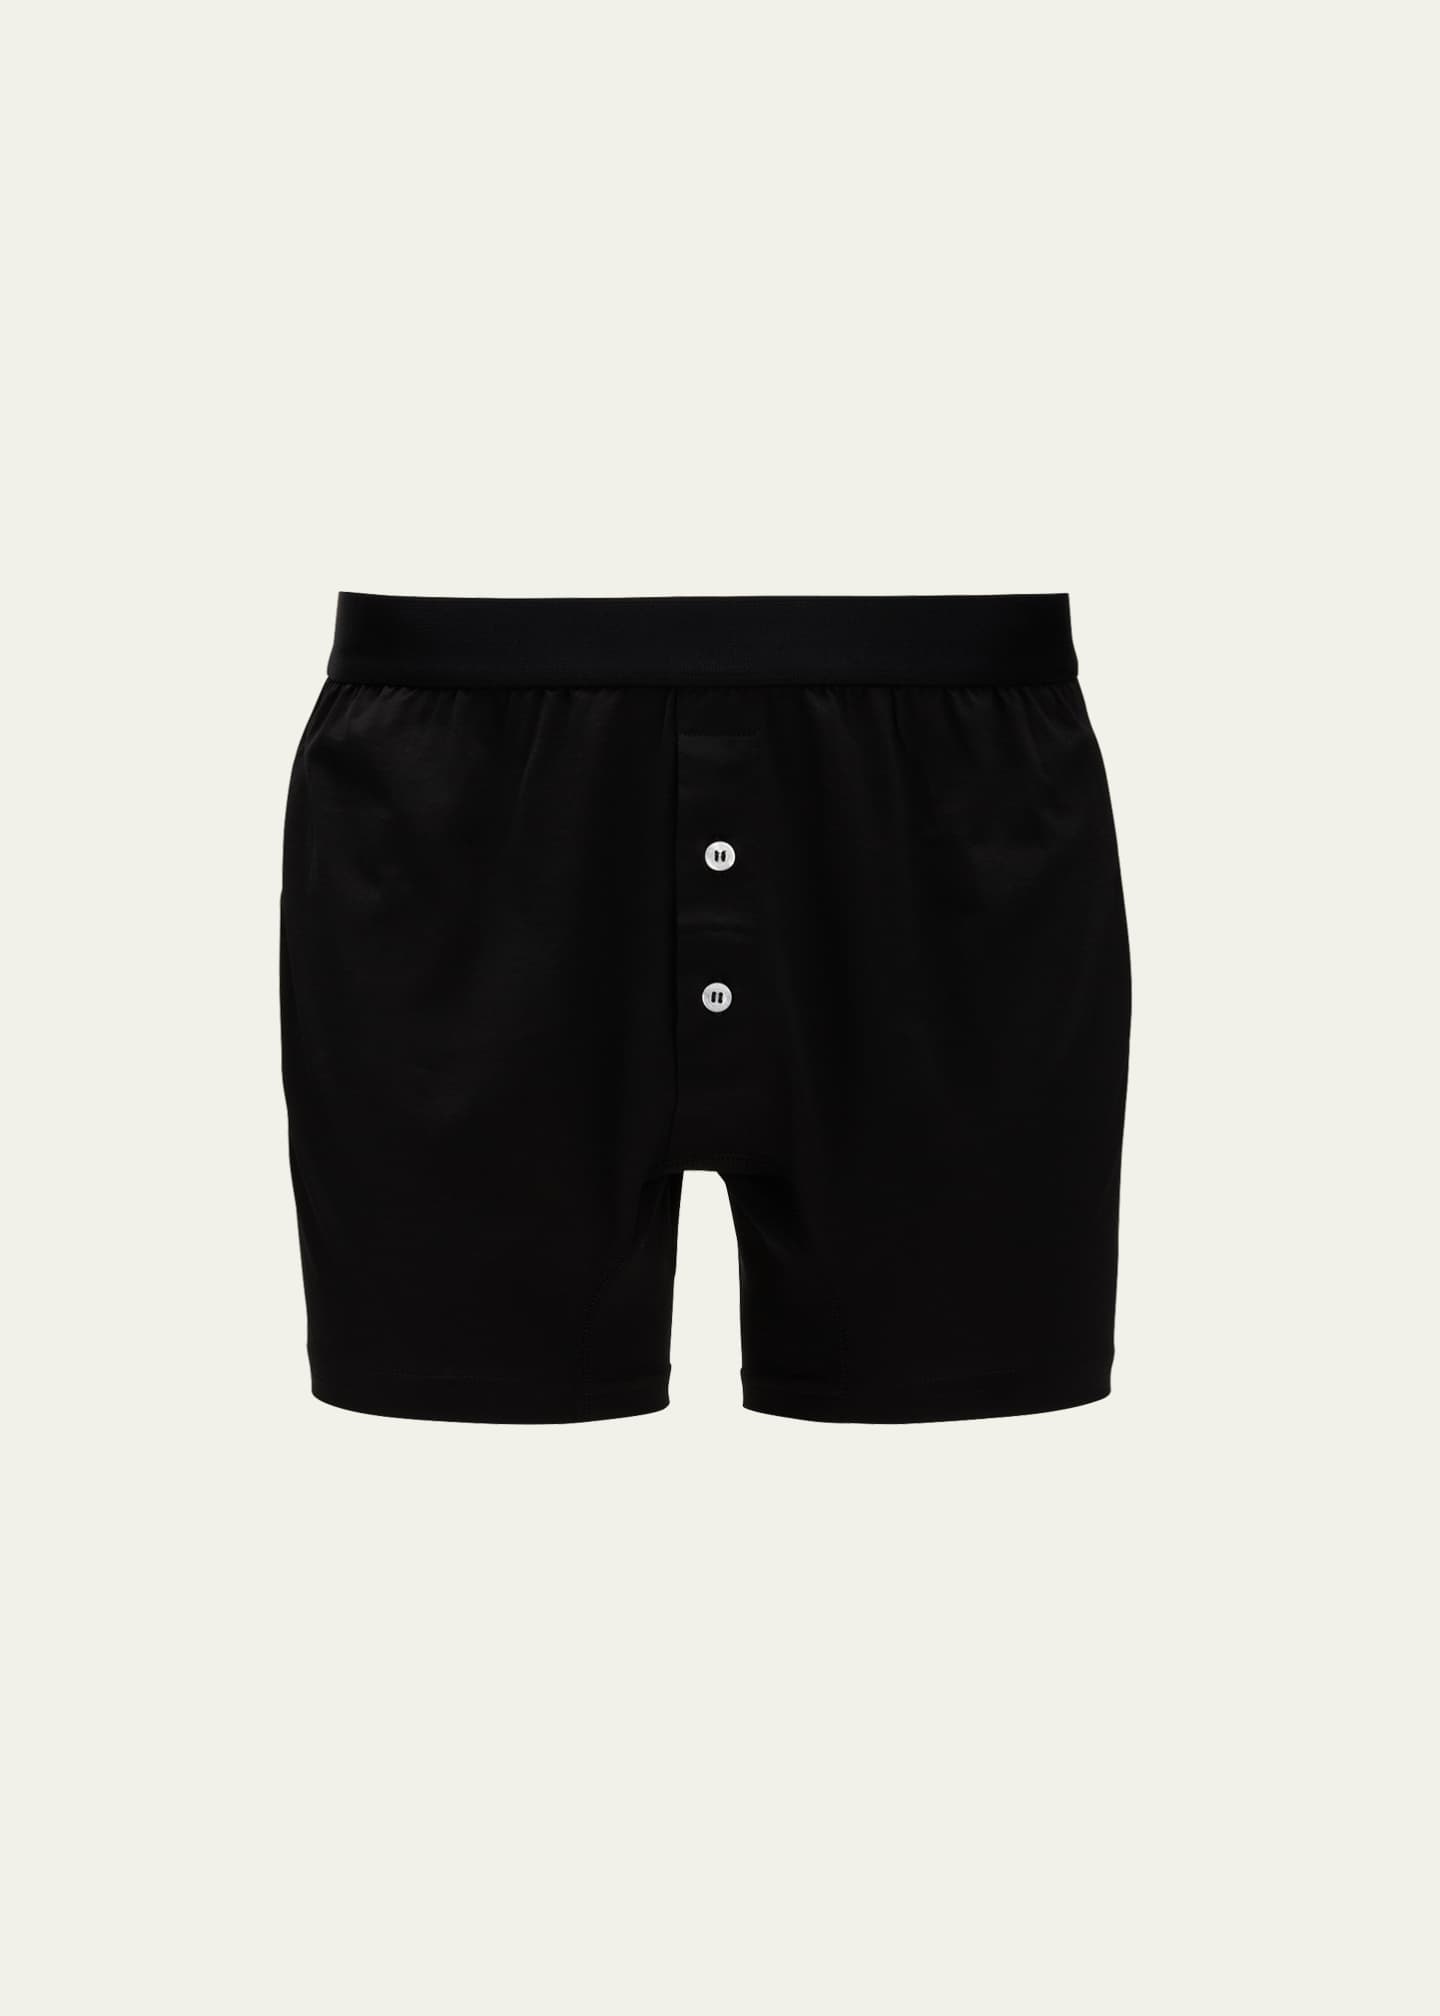 Men's Underwear at Bergdorf Goodman - Clothing